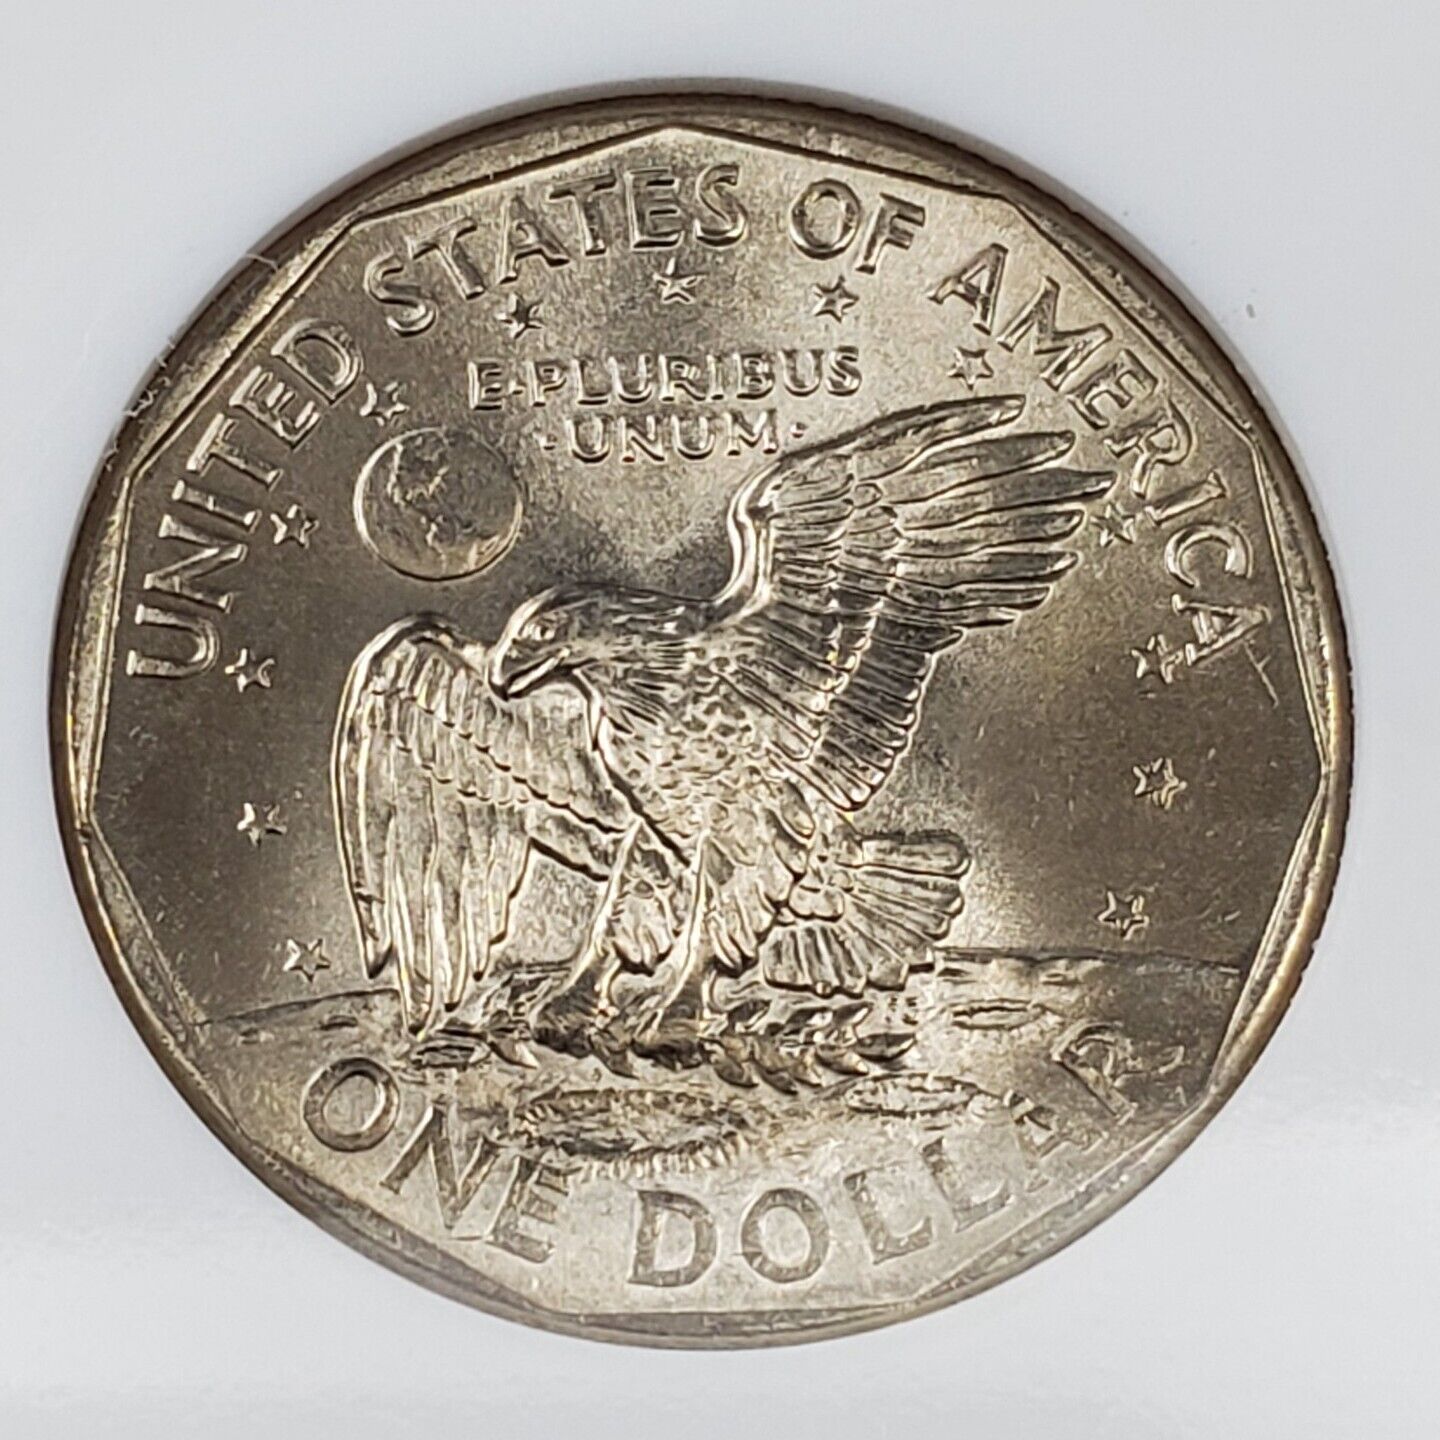 1999 D SBA $1 Susan B Anthony Small Size Dollar Coin NGC MS67 GEM BU Certified 2